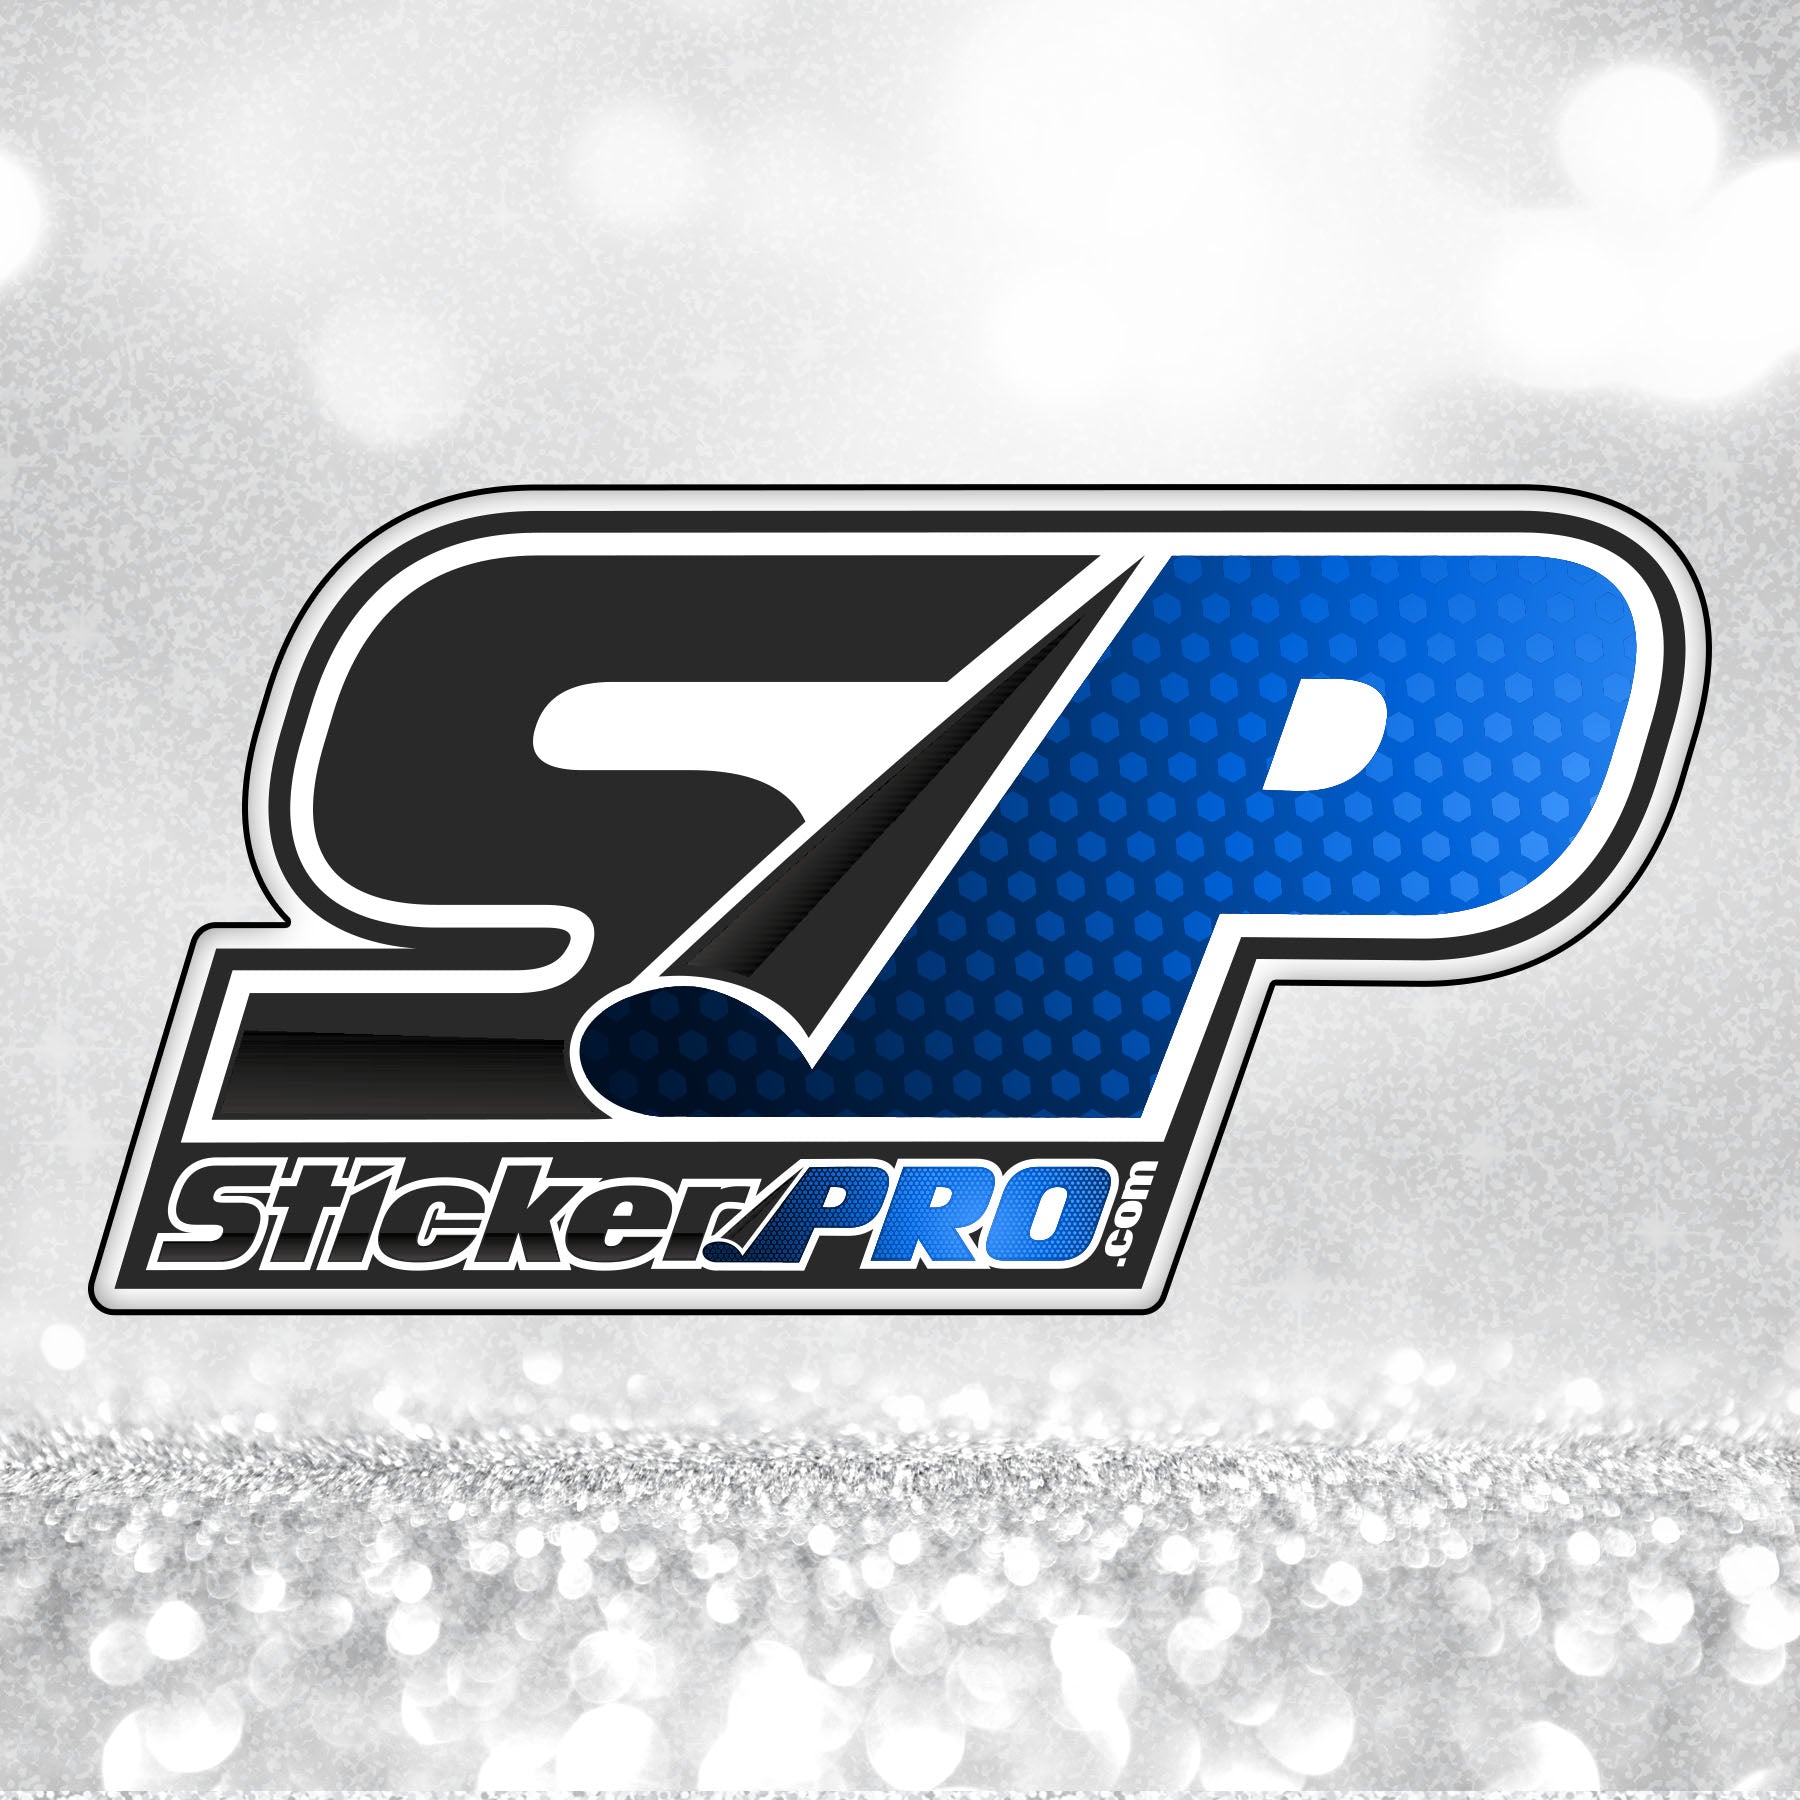 Sticker Pro USA - Sticker Pros - Custom Stickers - Circle Stickers - StickerPRO.com